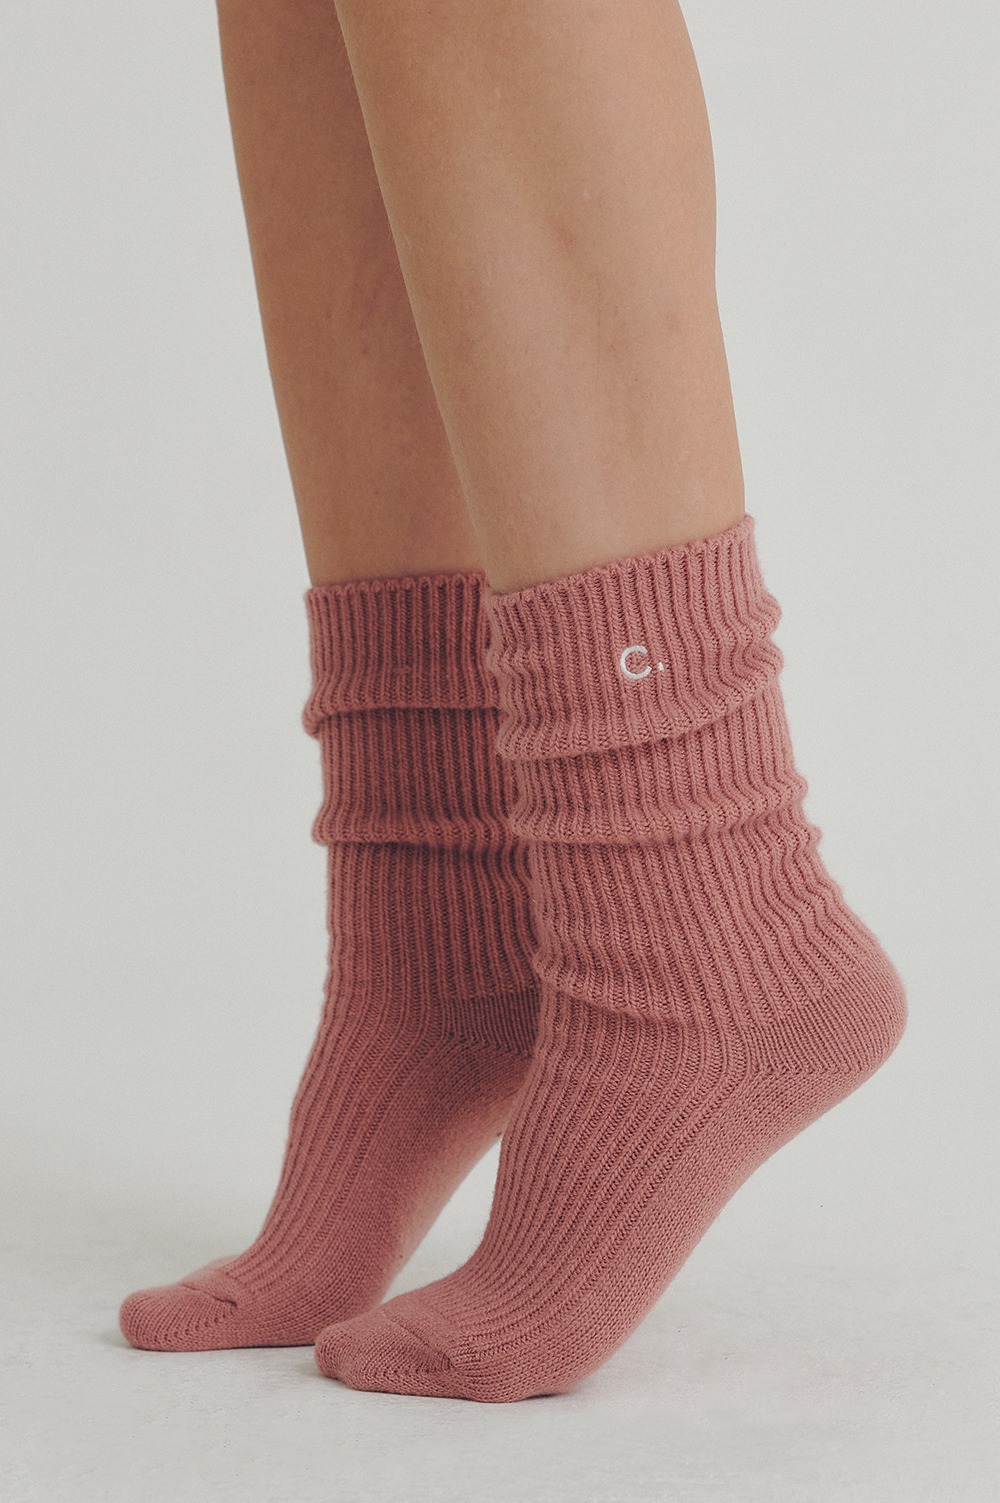 clove - [22FW clove] Cashmere Blended Socks (Pink)